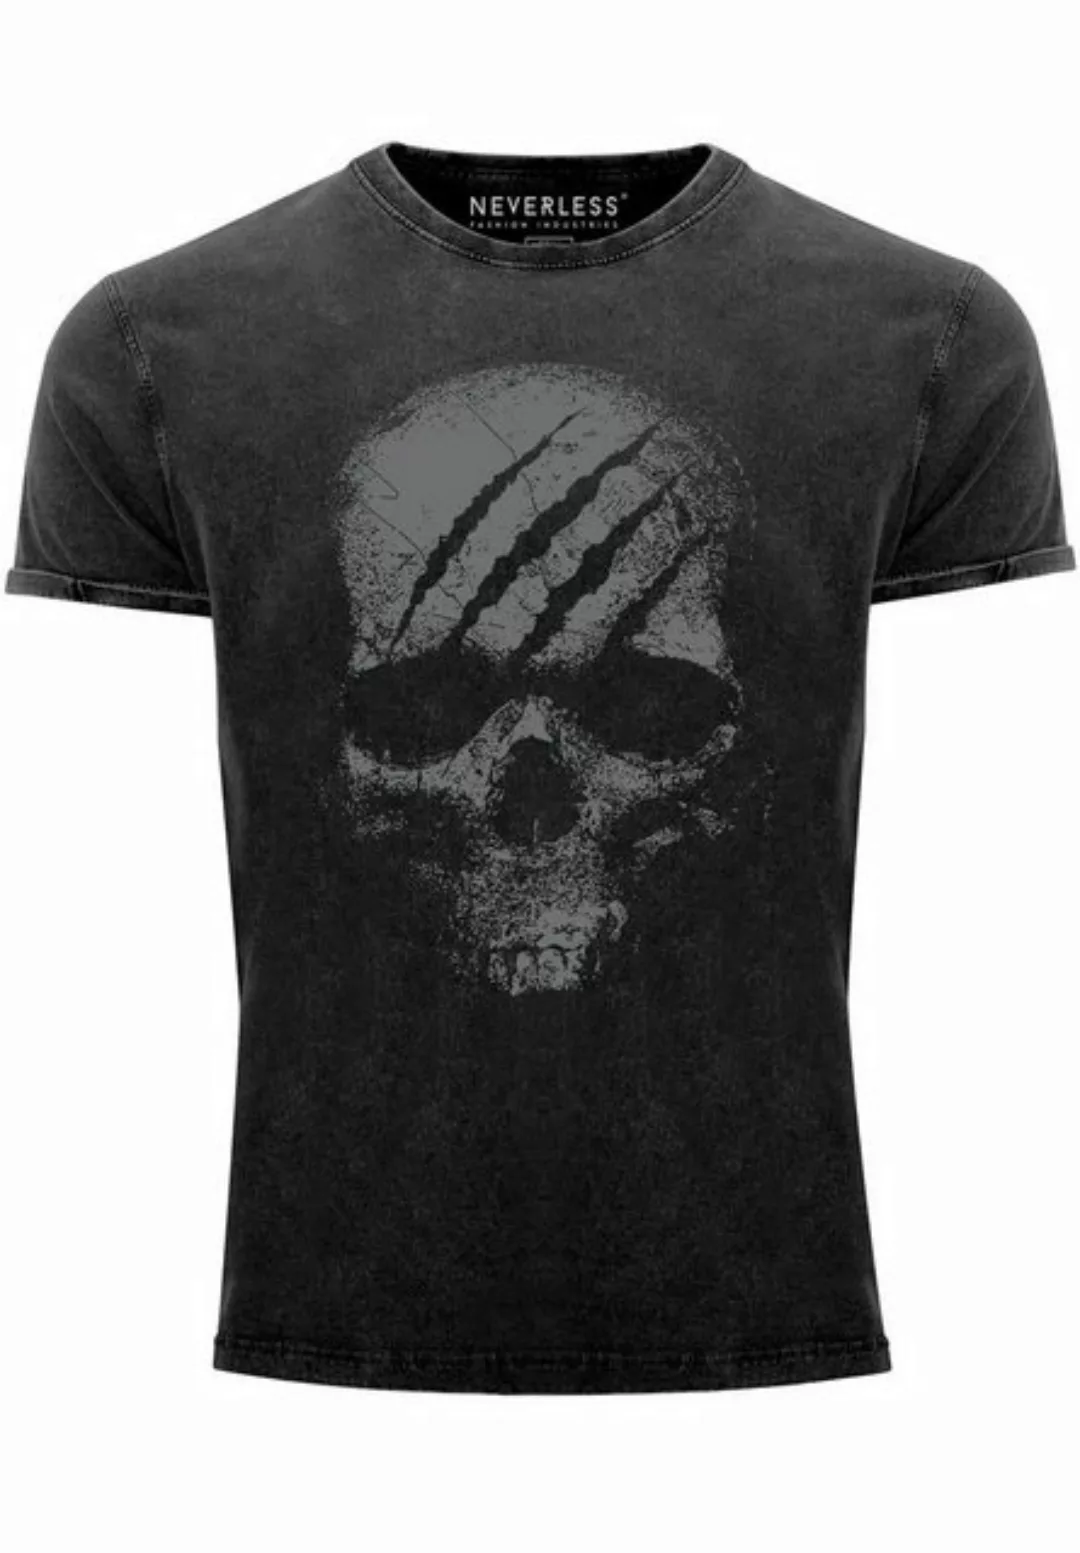 Neverless Print-Shirt Herren Vintage Shirt Totenkopf Skull Totenschädel Ske günstig online kaufen